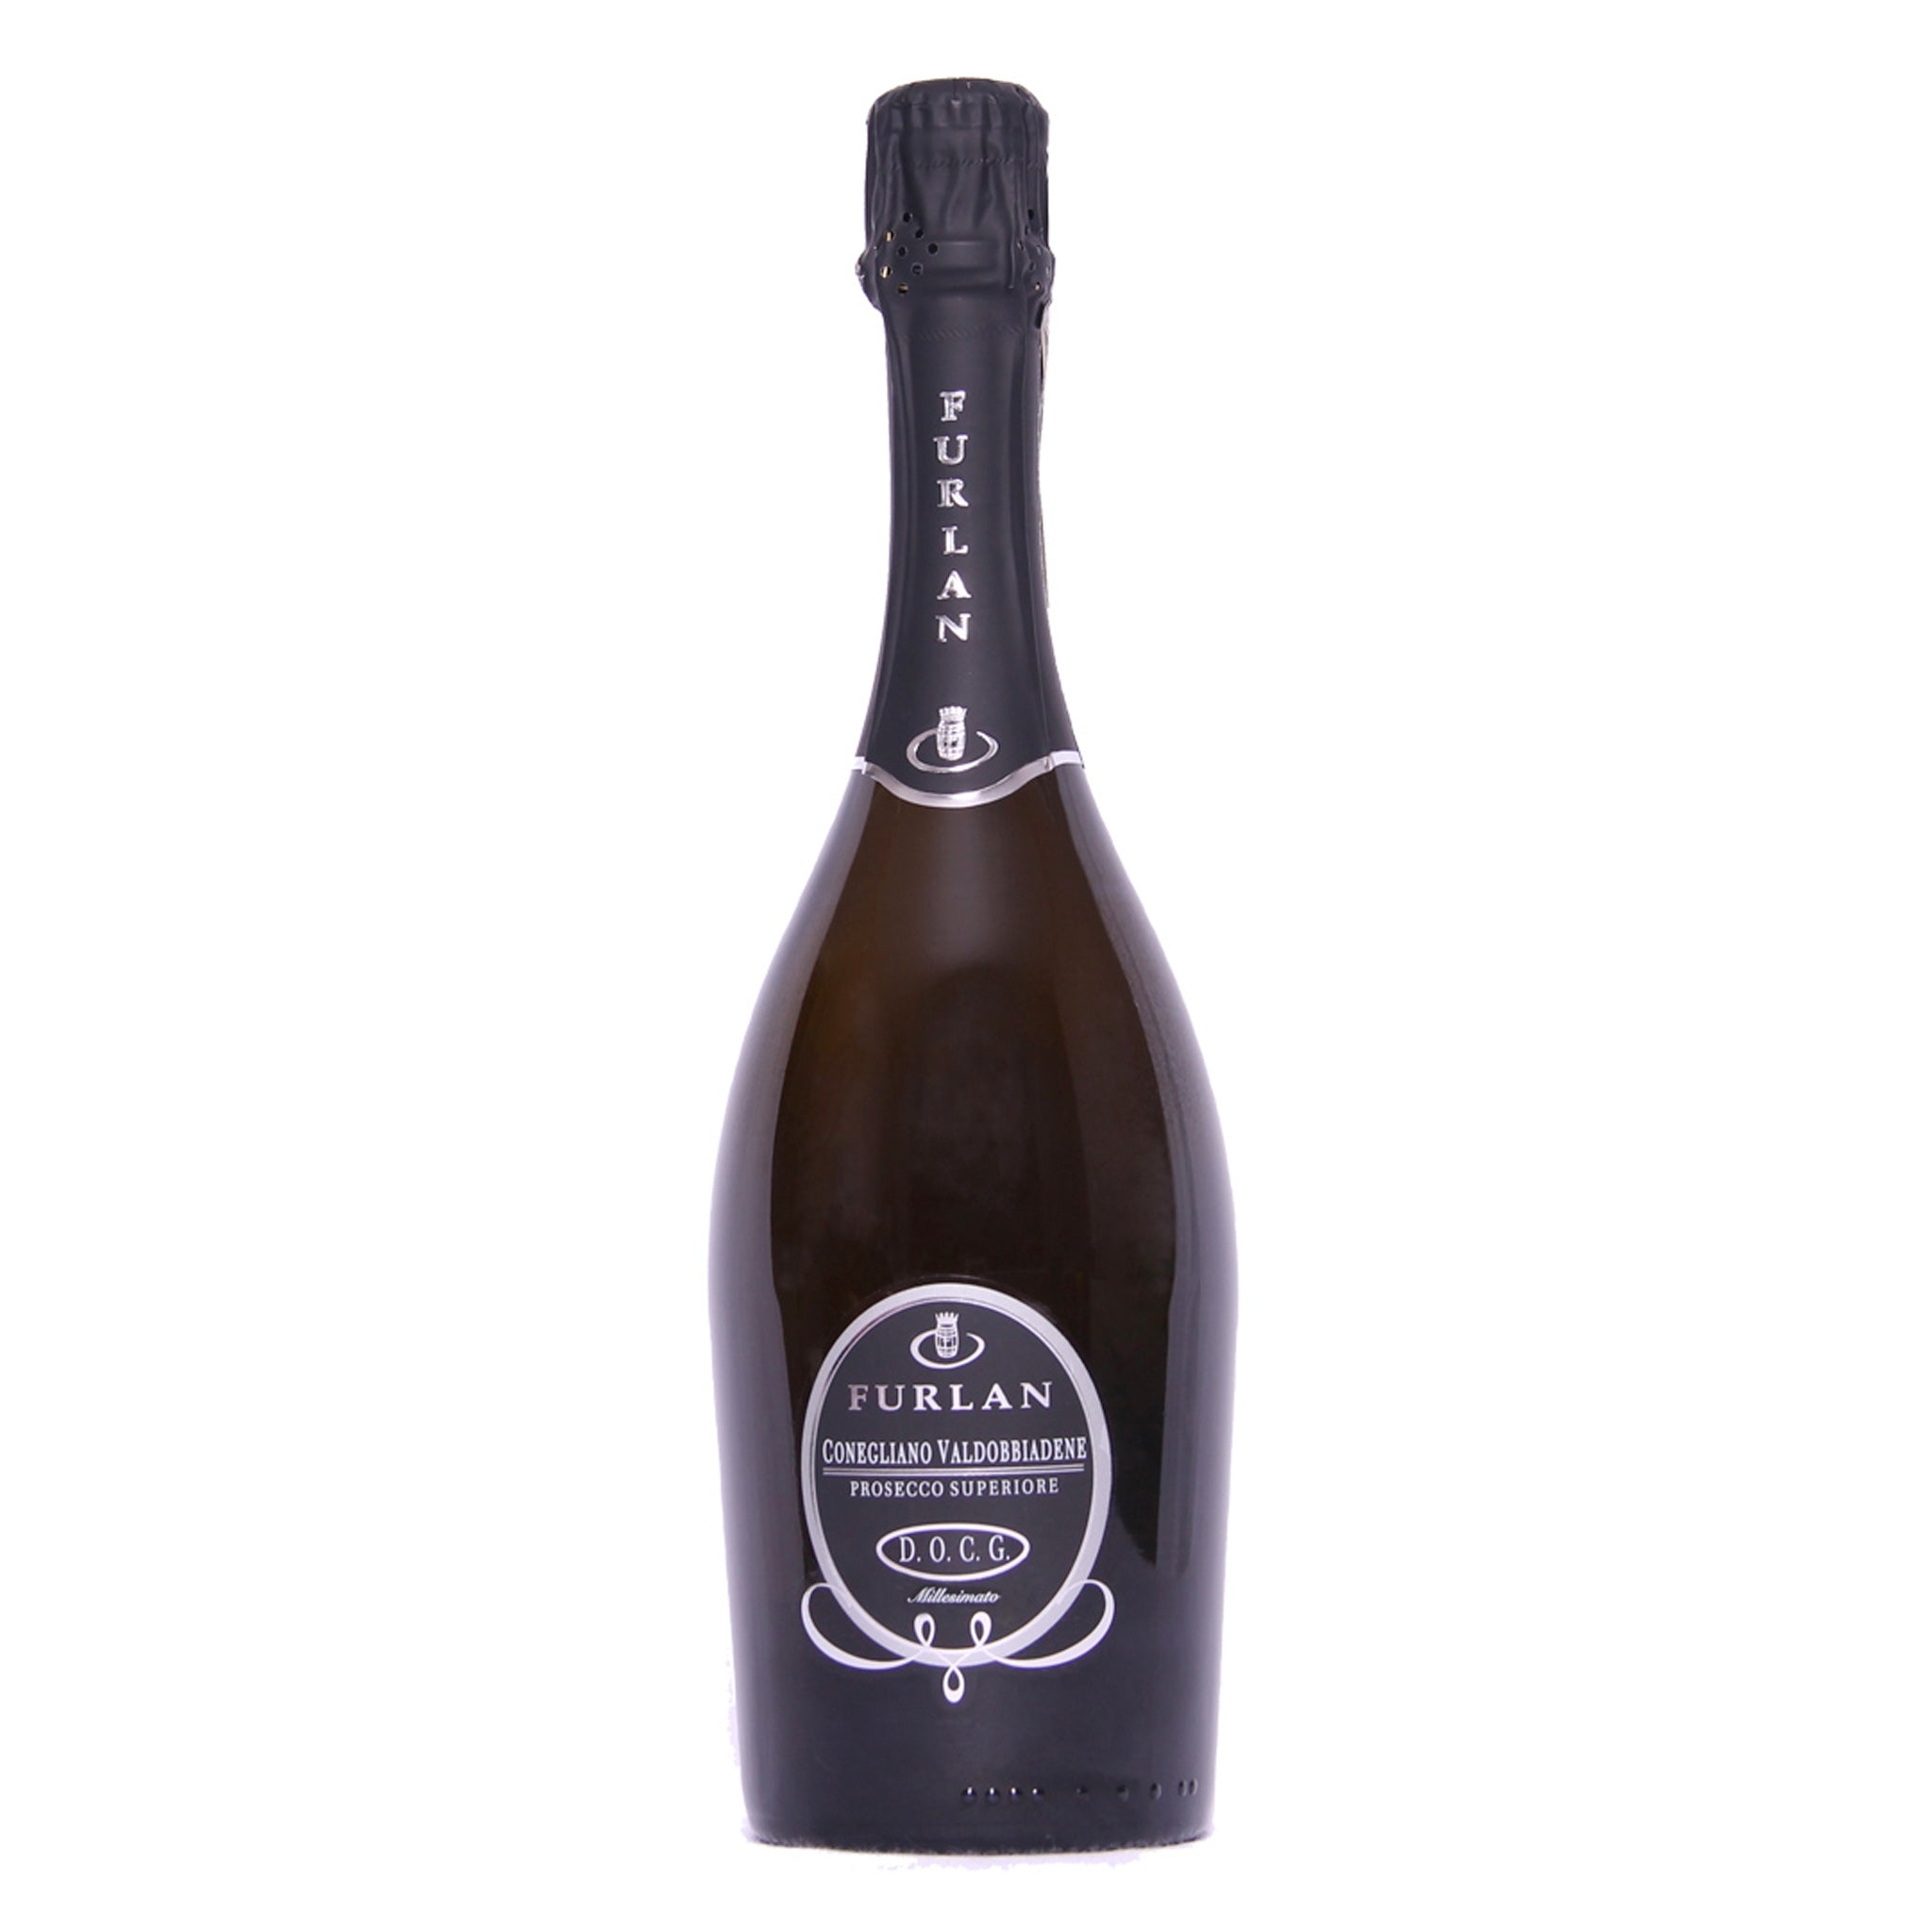 Furlan Prosecco Superiore DOCG Extra Dry black and silver bottle 750ml Congeliano-Valdobbiadene